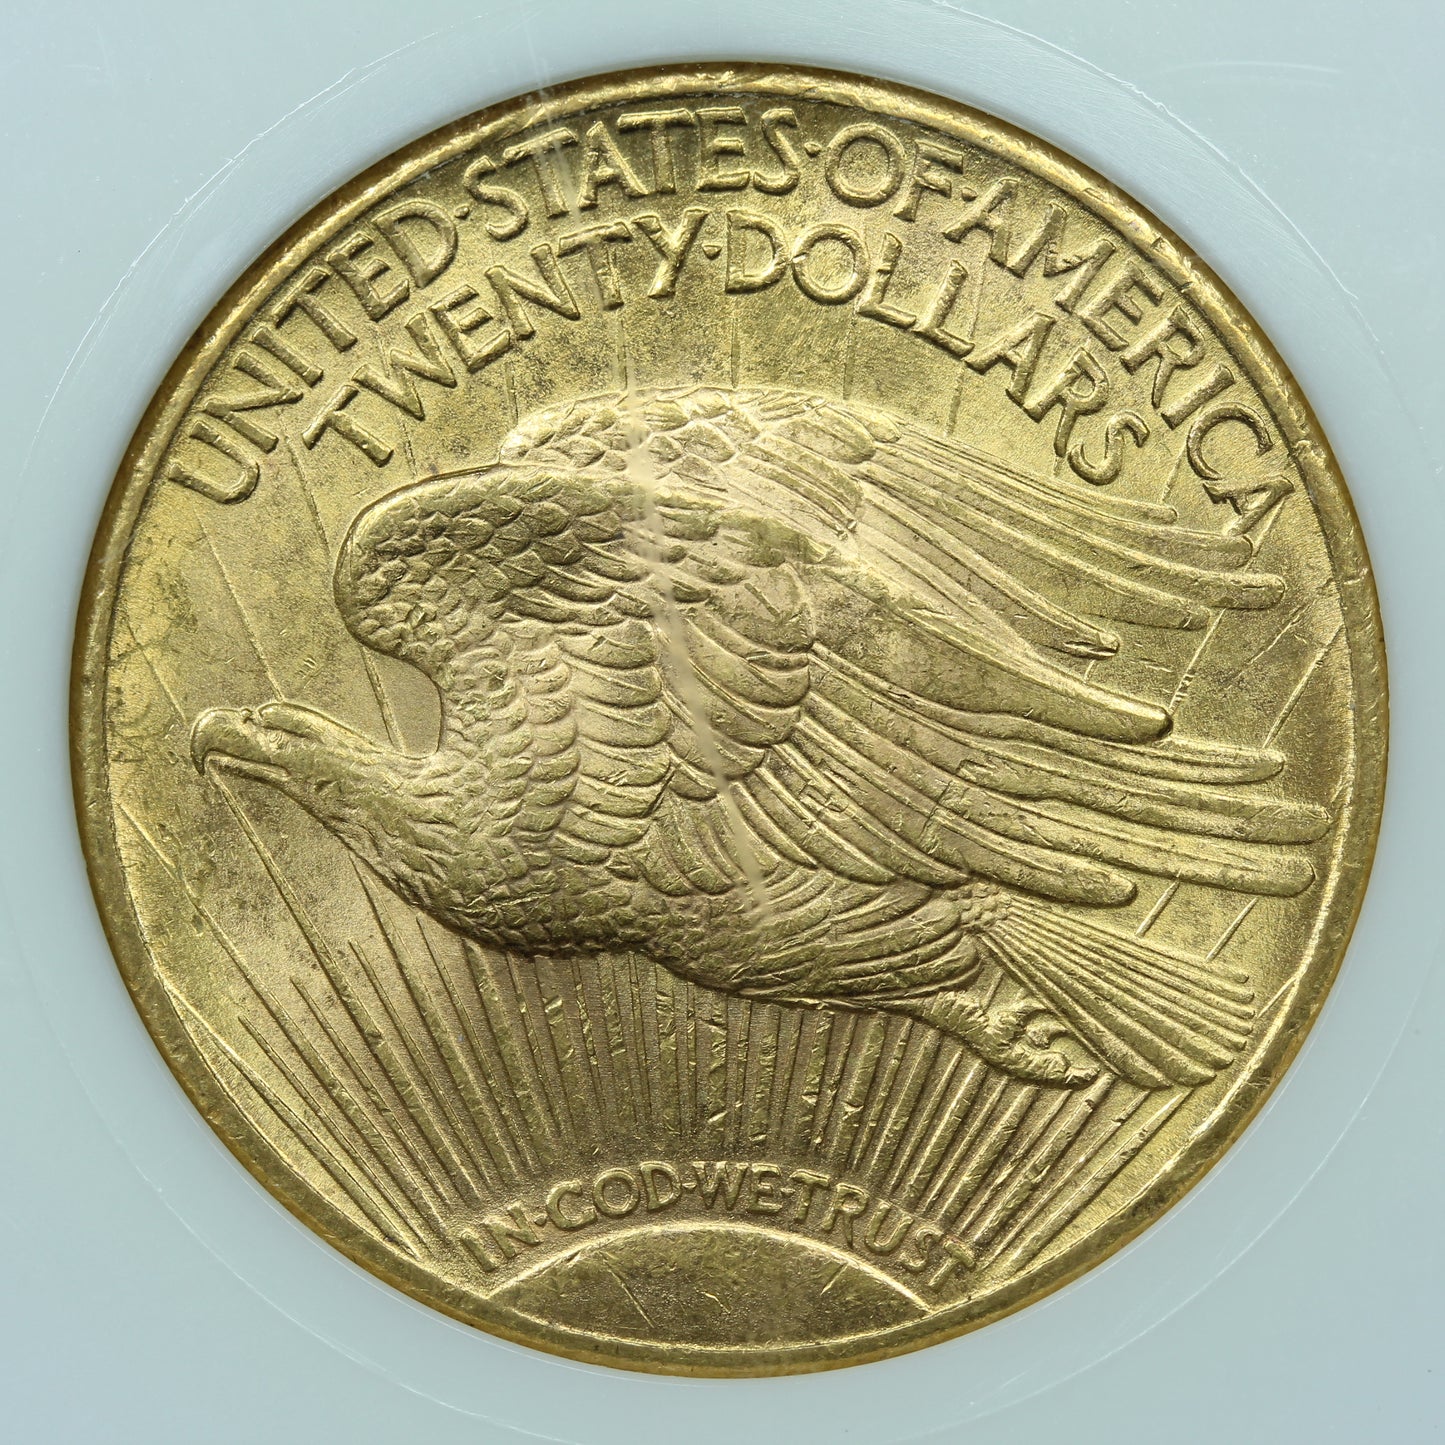 1924 (Philadelphia) $20 Saint-Gaudens US Gold Double Eagle Coin - NGC MS 61